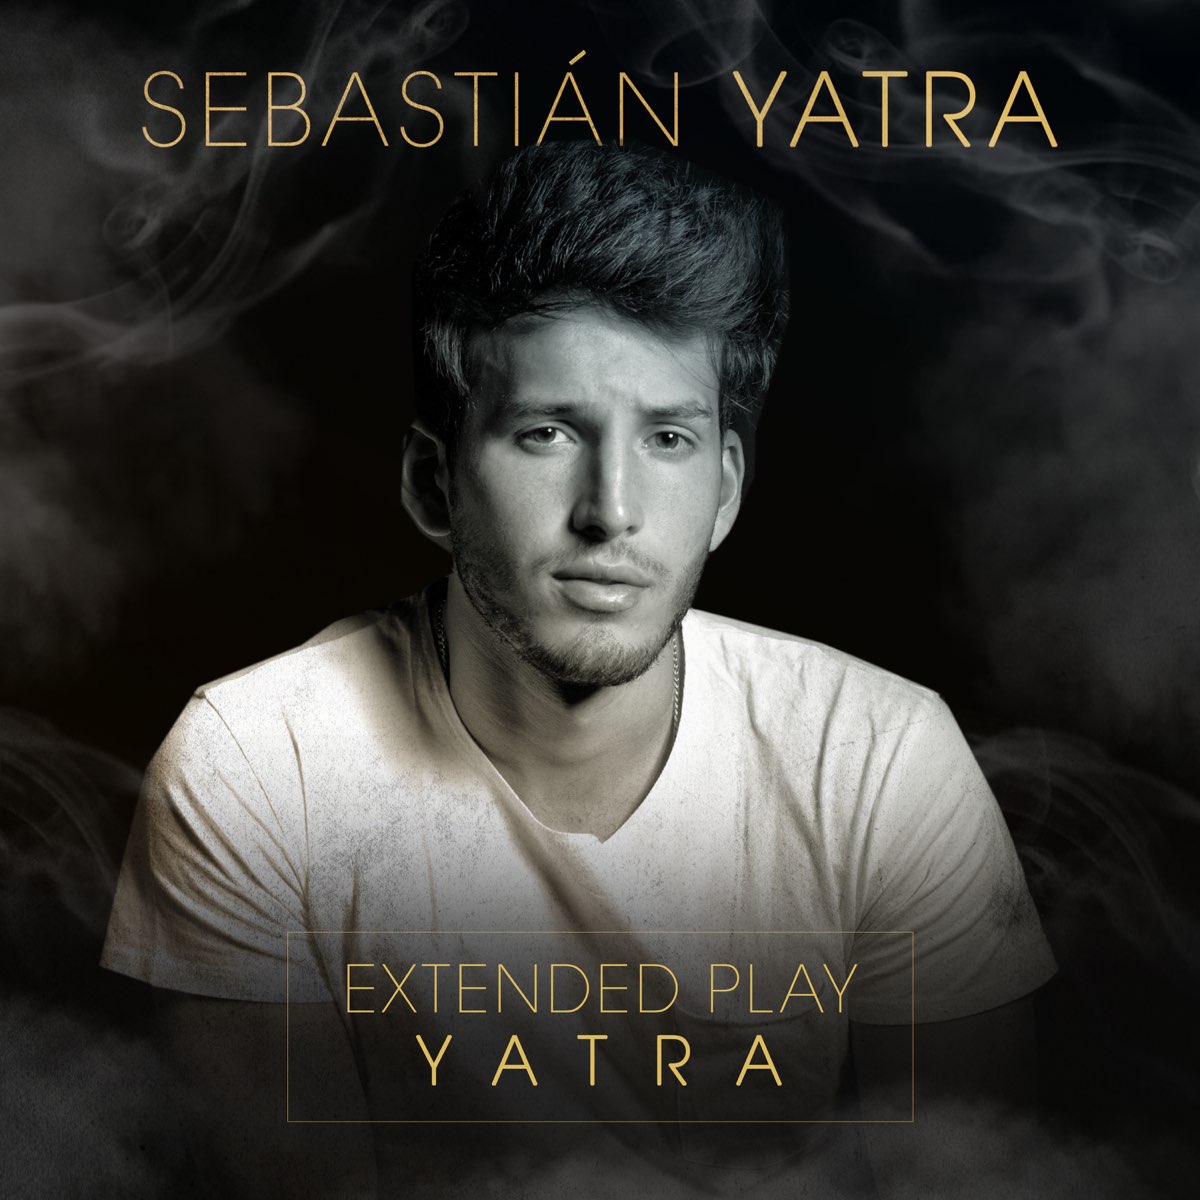 Extended Play Yatra - EP de Sebastián Yatra en Apple Music